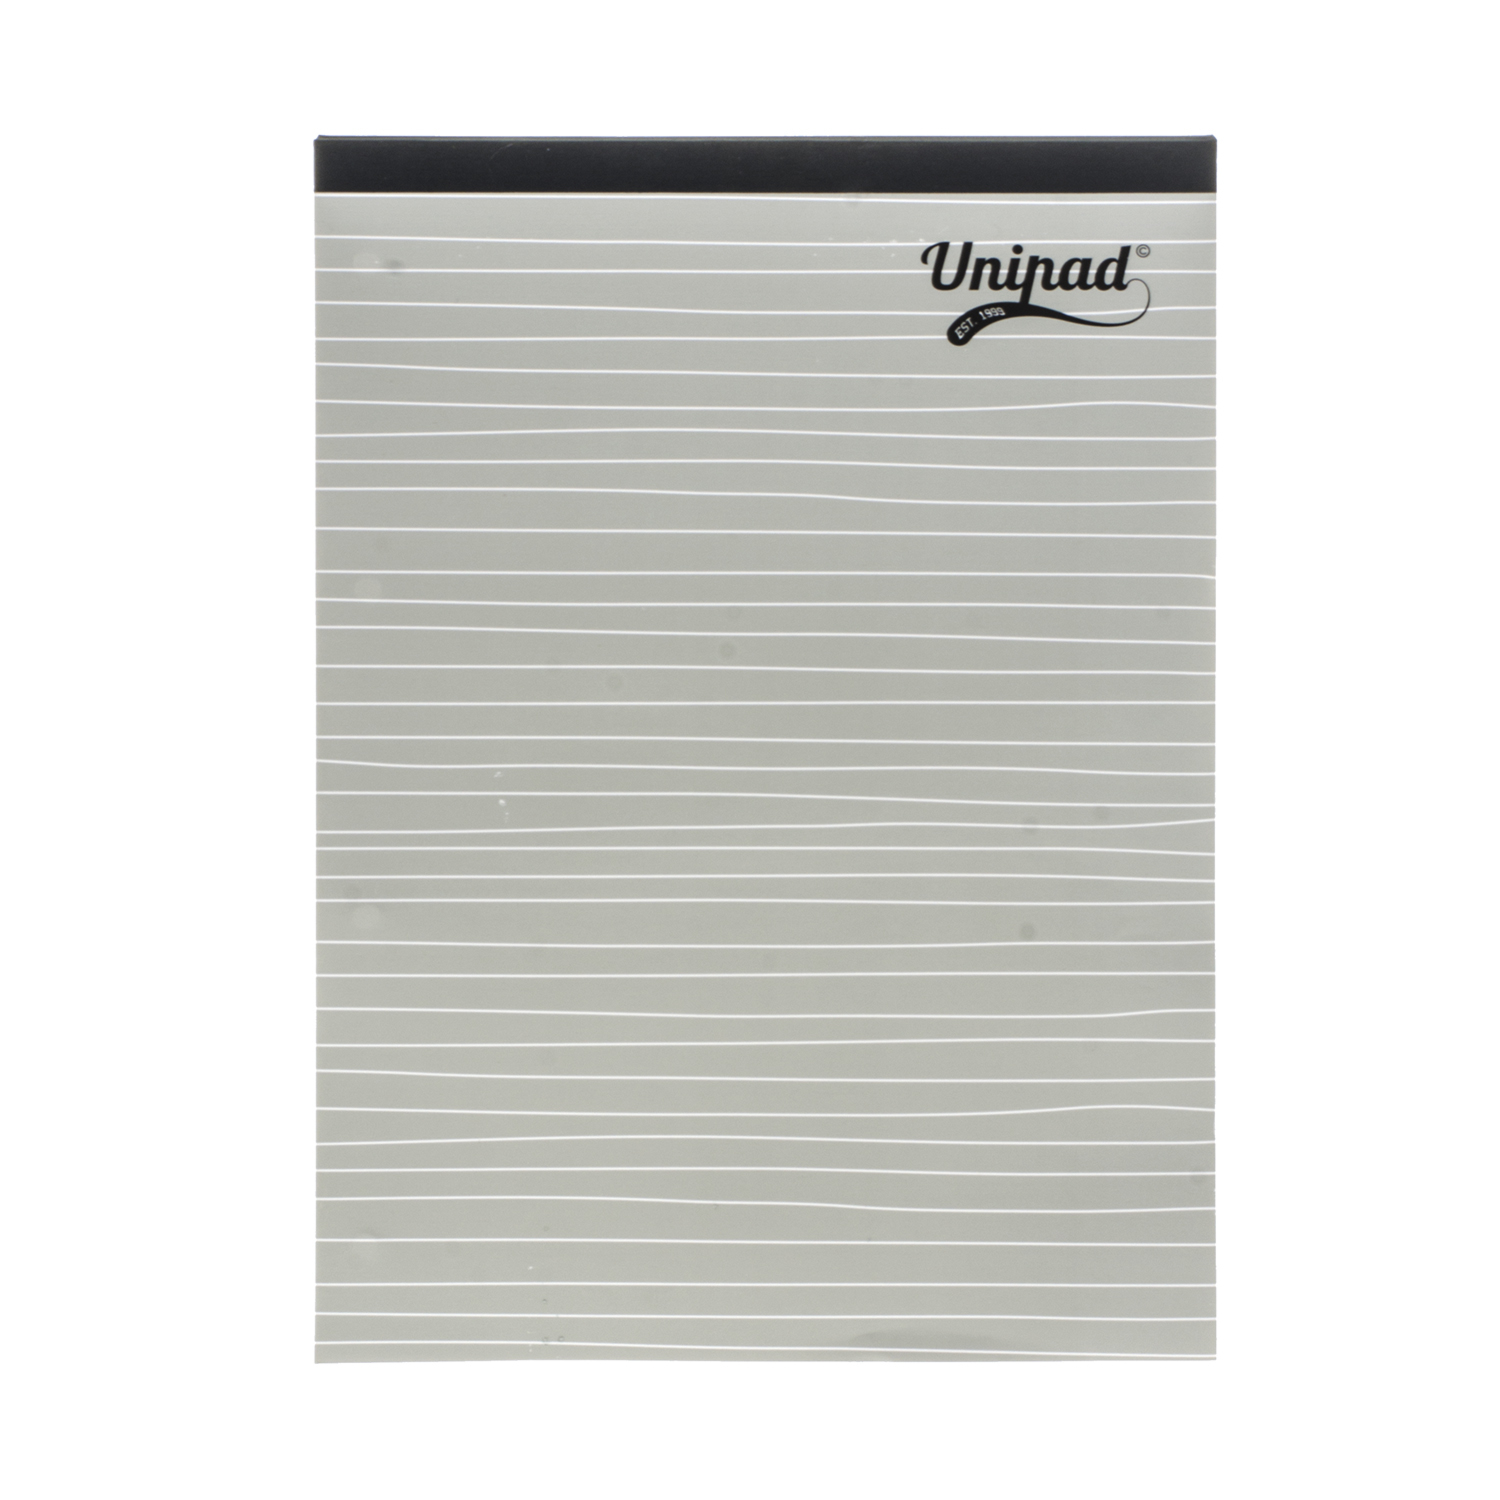 A4 Pukka Unipad Refill Pad Image 3